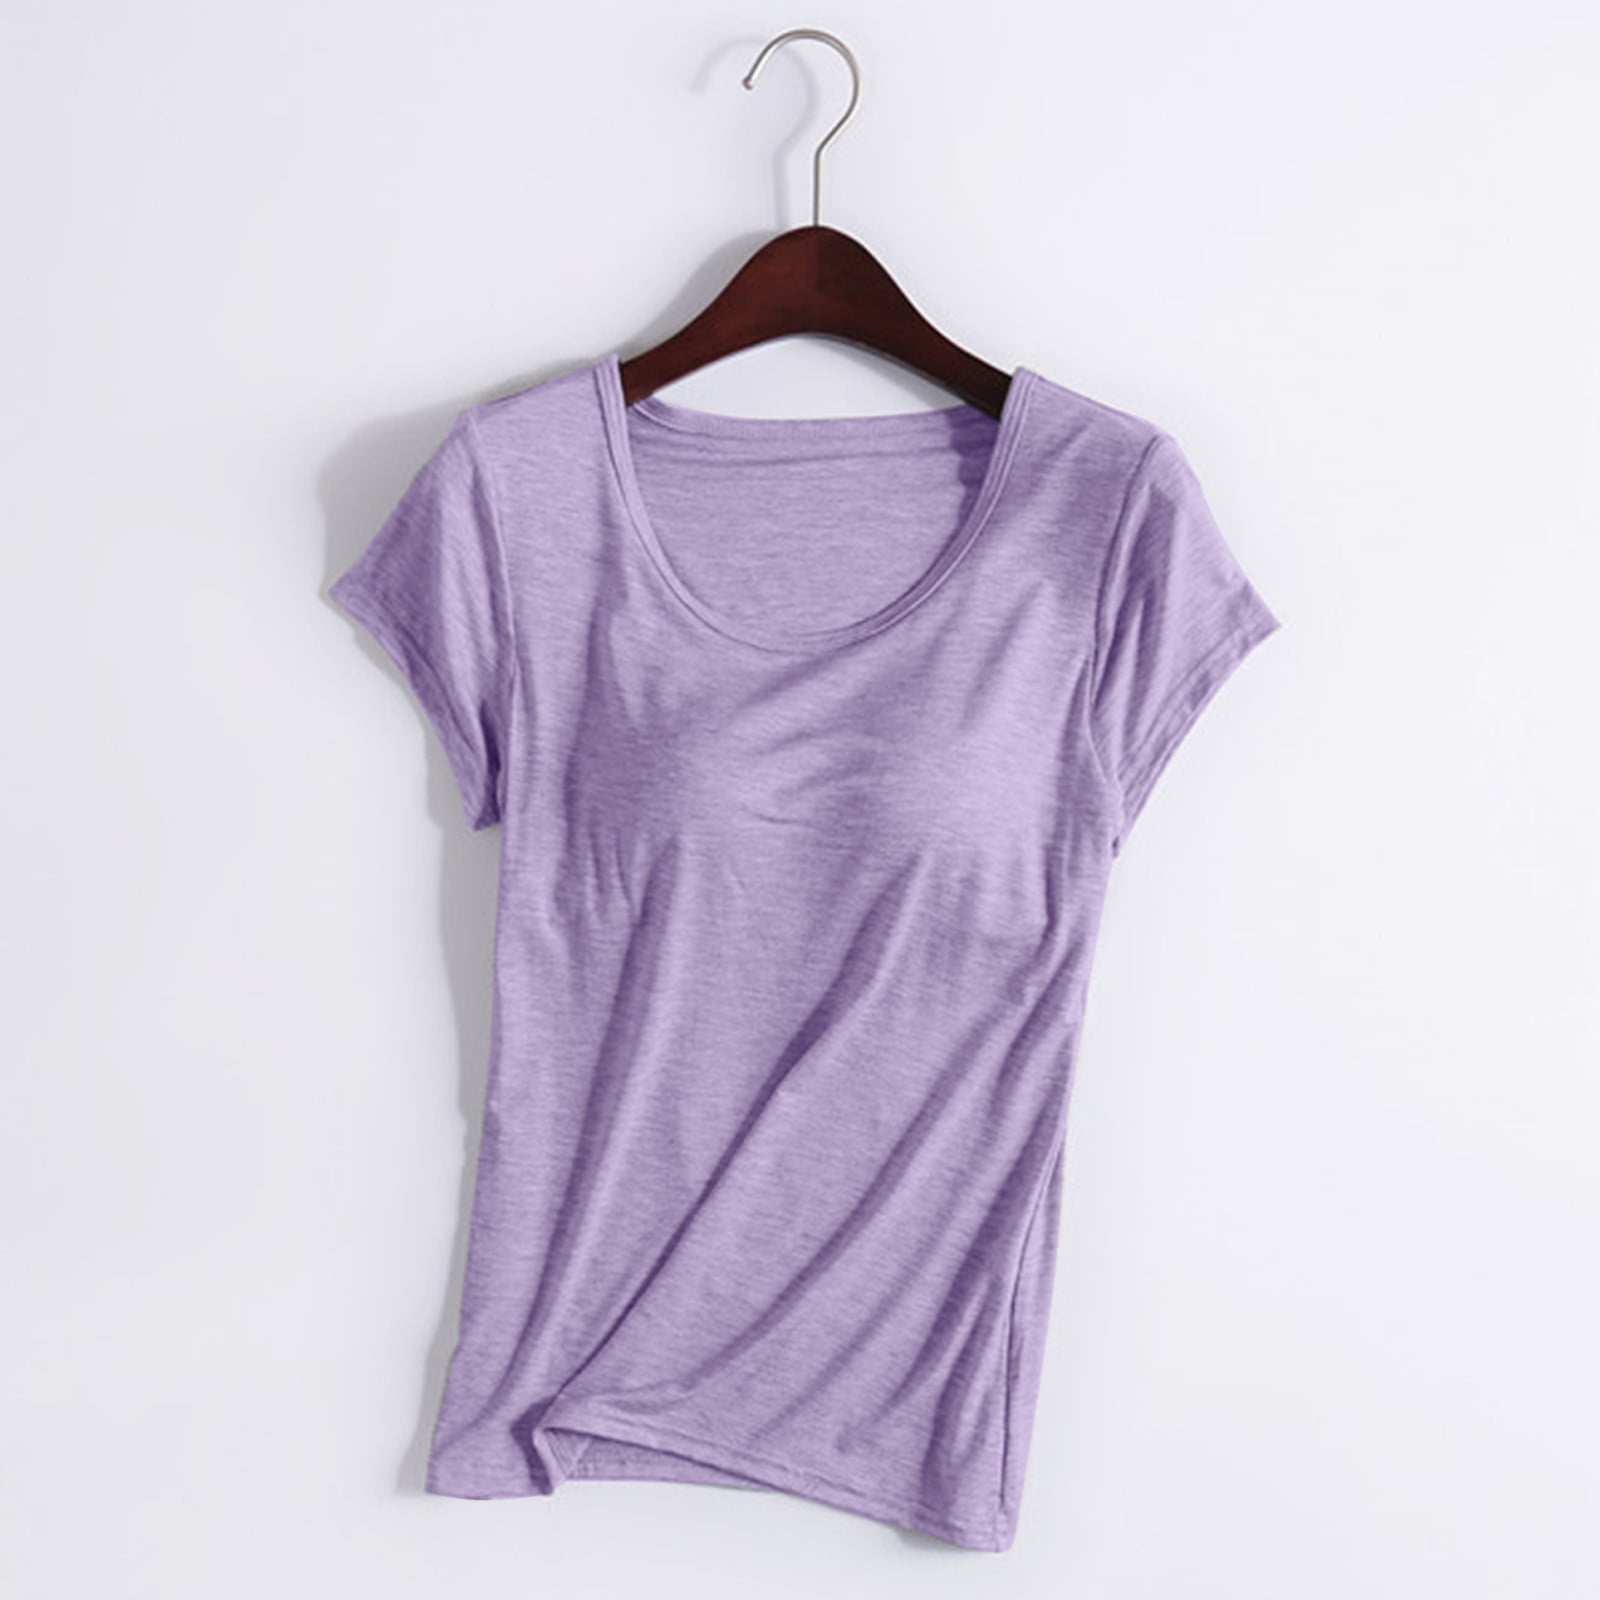 Charella Women 's Modal T Shirt Bra Short Sleeve Pajama Padded Yoga Top  Casual Top Tee Purple,XXXL